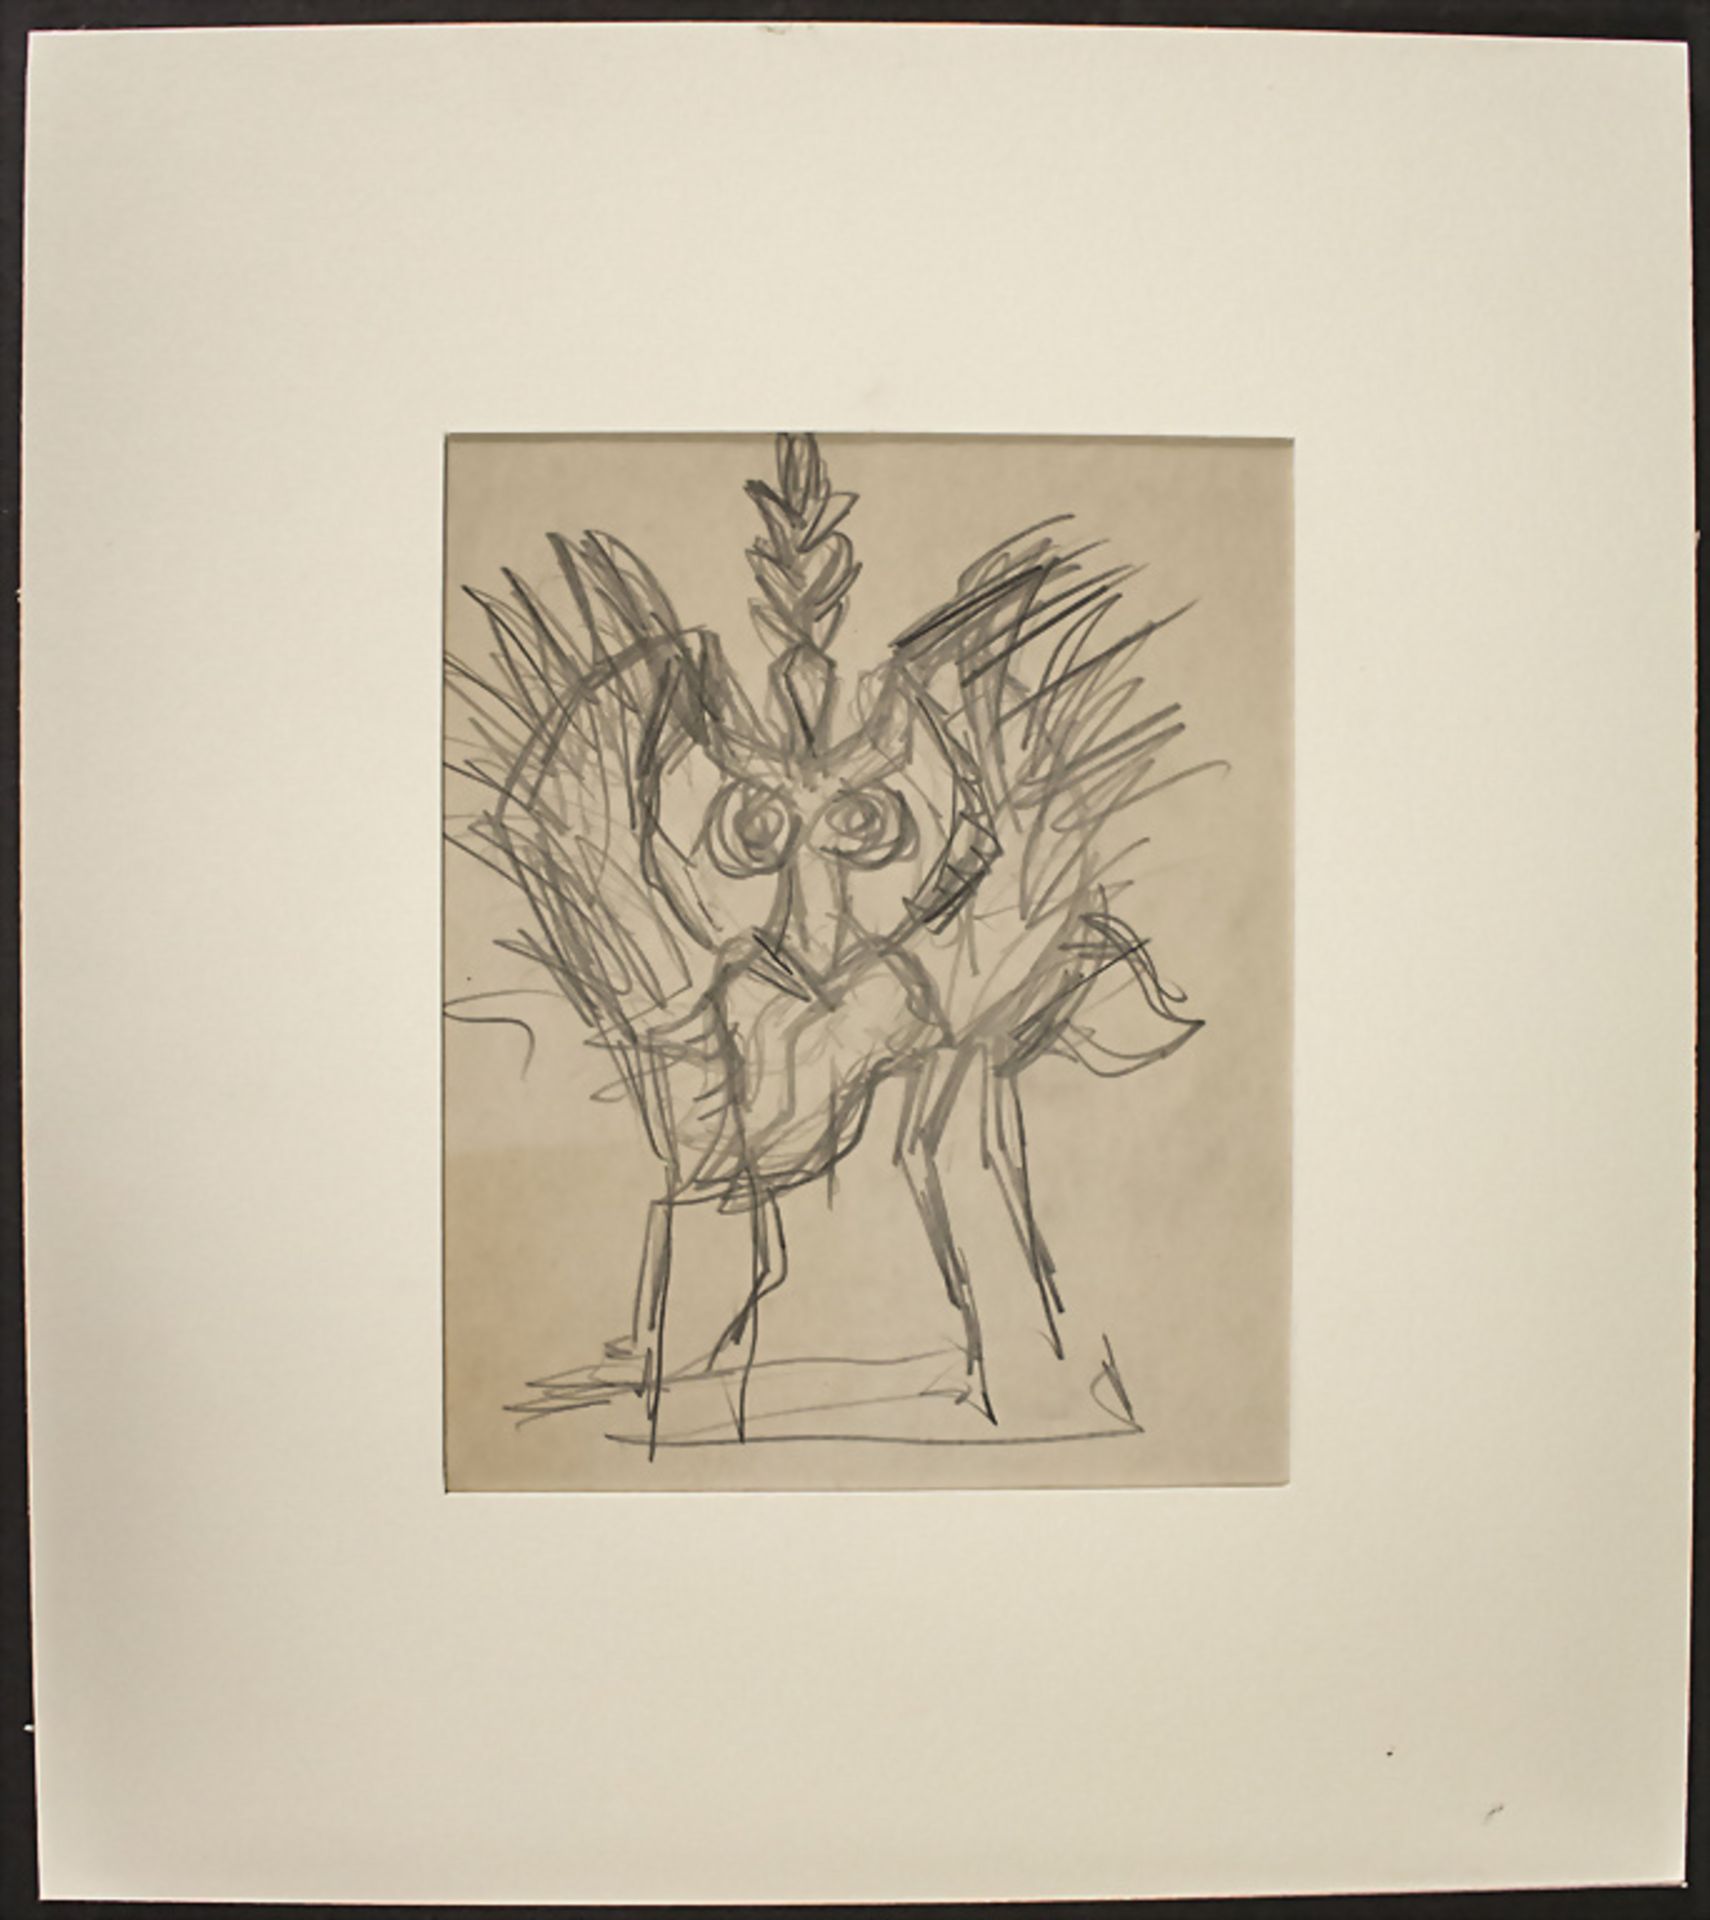 Jacques LIPCHITZ (1891-1973), Skizze 'Thronende Figur' / Sketch 'Enthroned figure' - Image 2 of 3